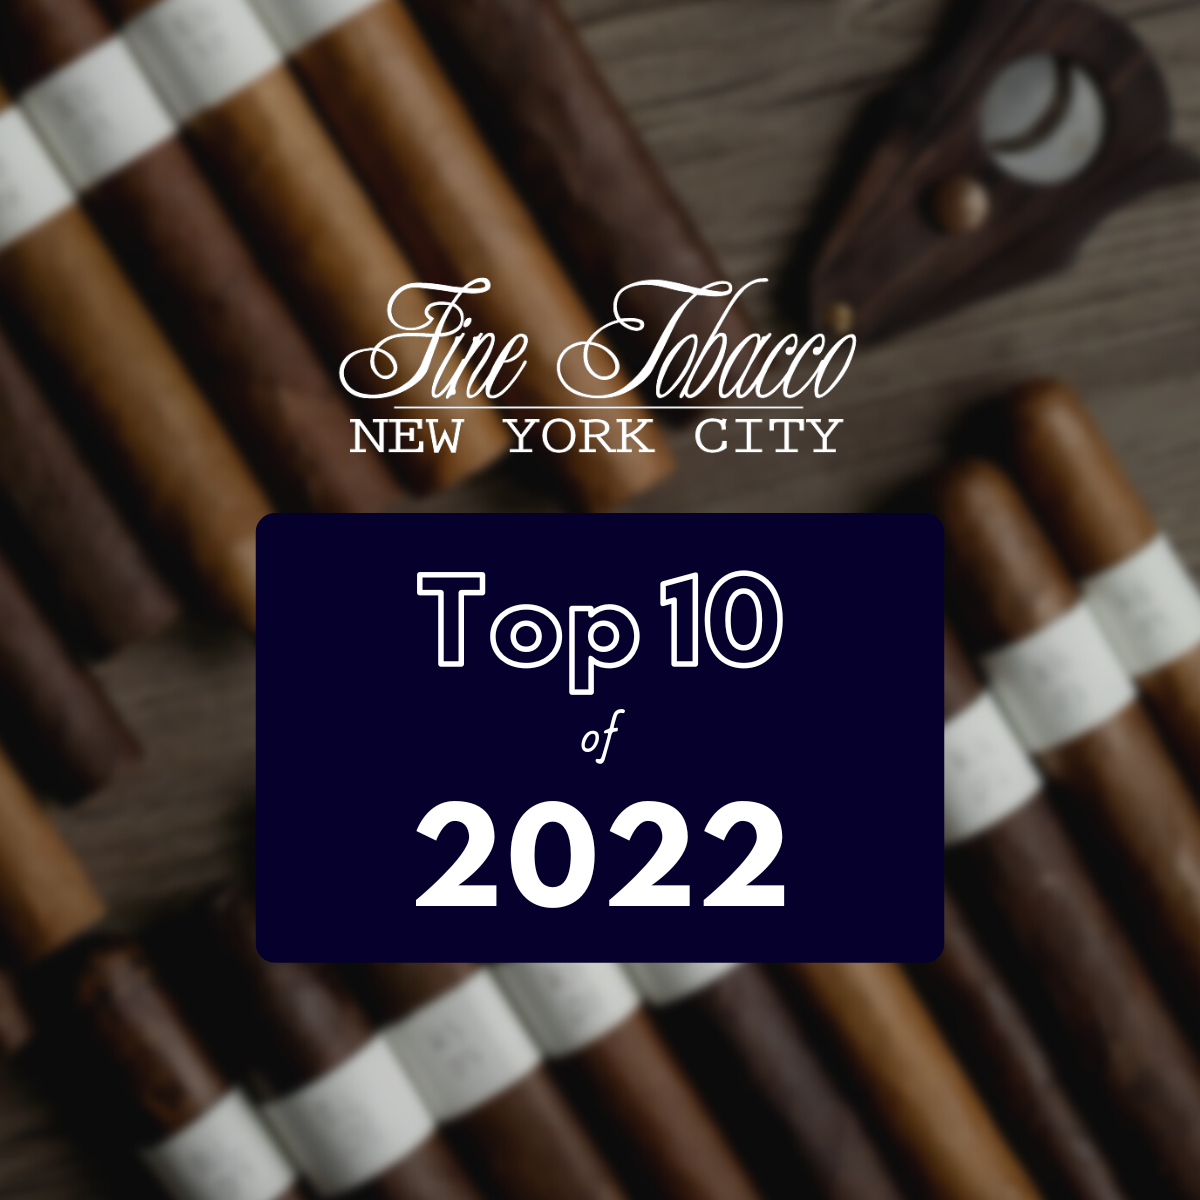 Top 10 of 2022